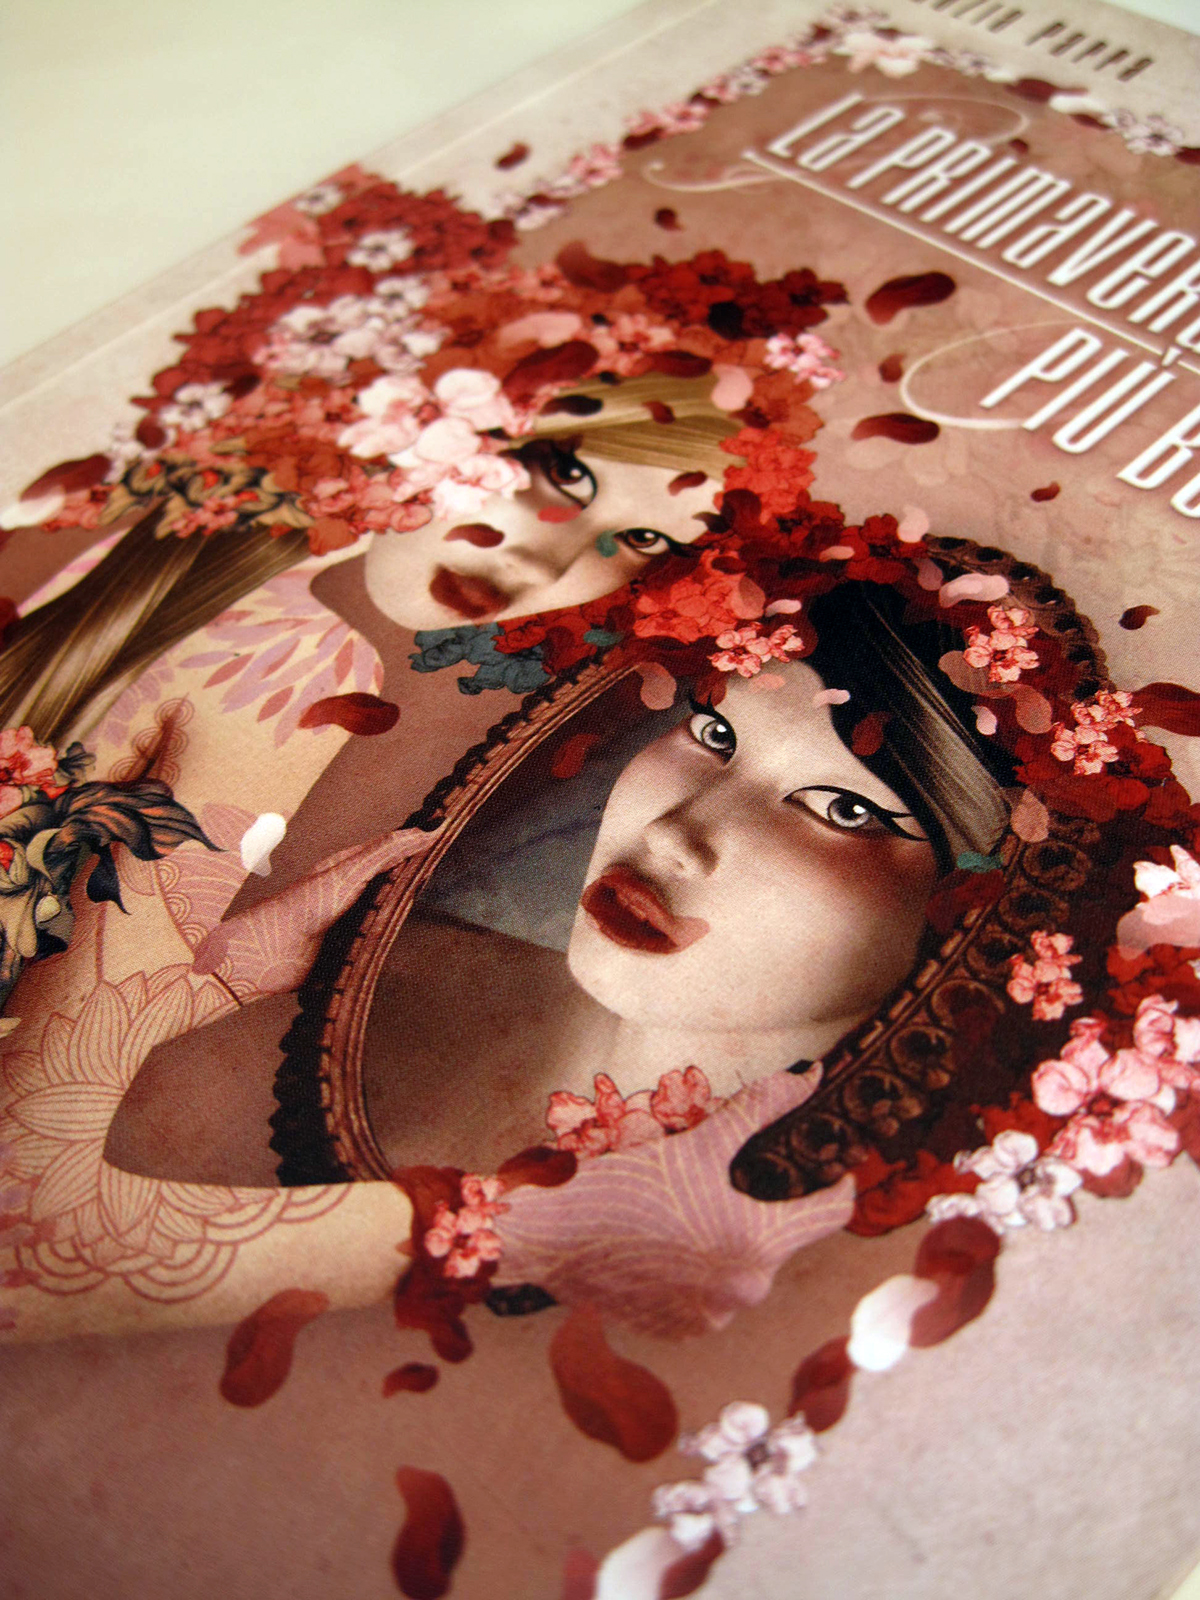 book cover spring beauty Flowers Nature girl danger twings big eyes pop fantasy surreal pop surrealism digital collage